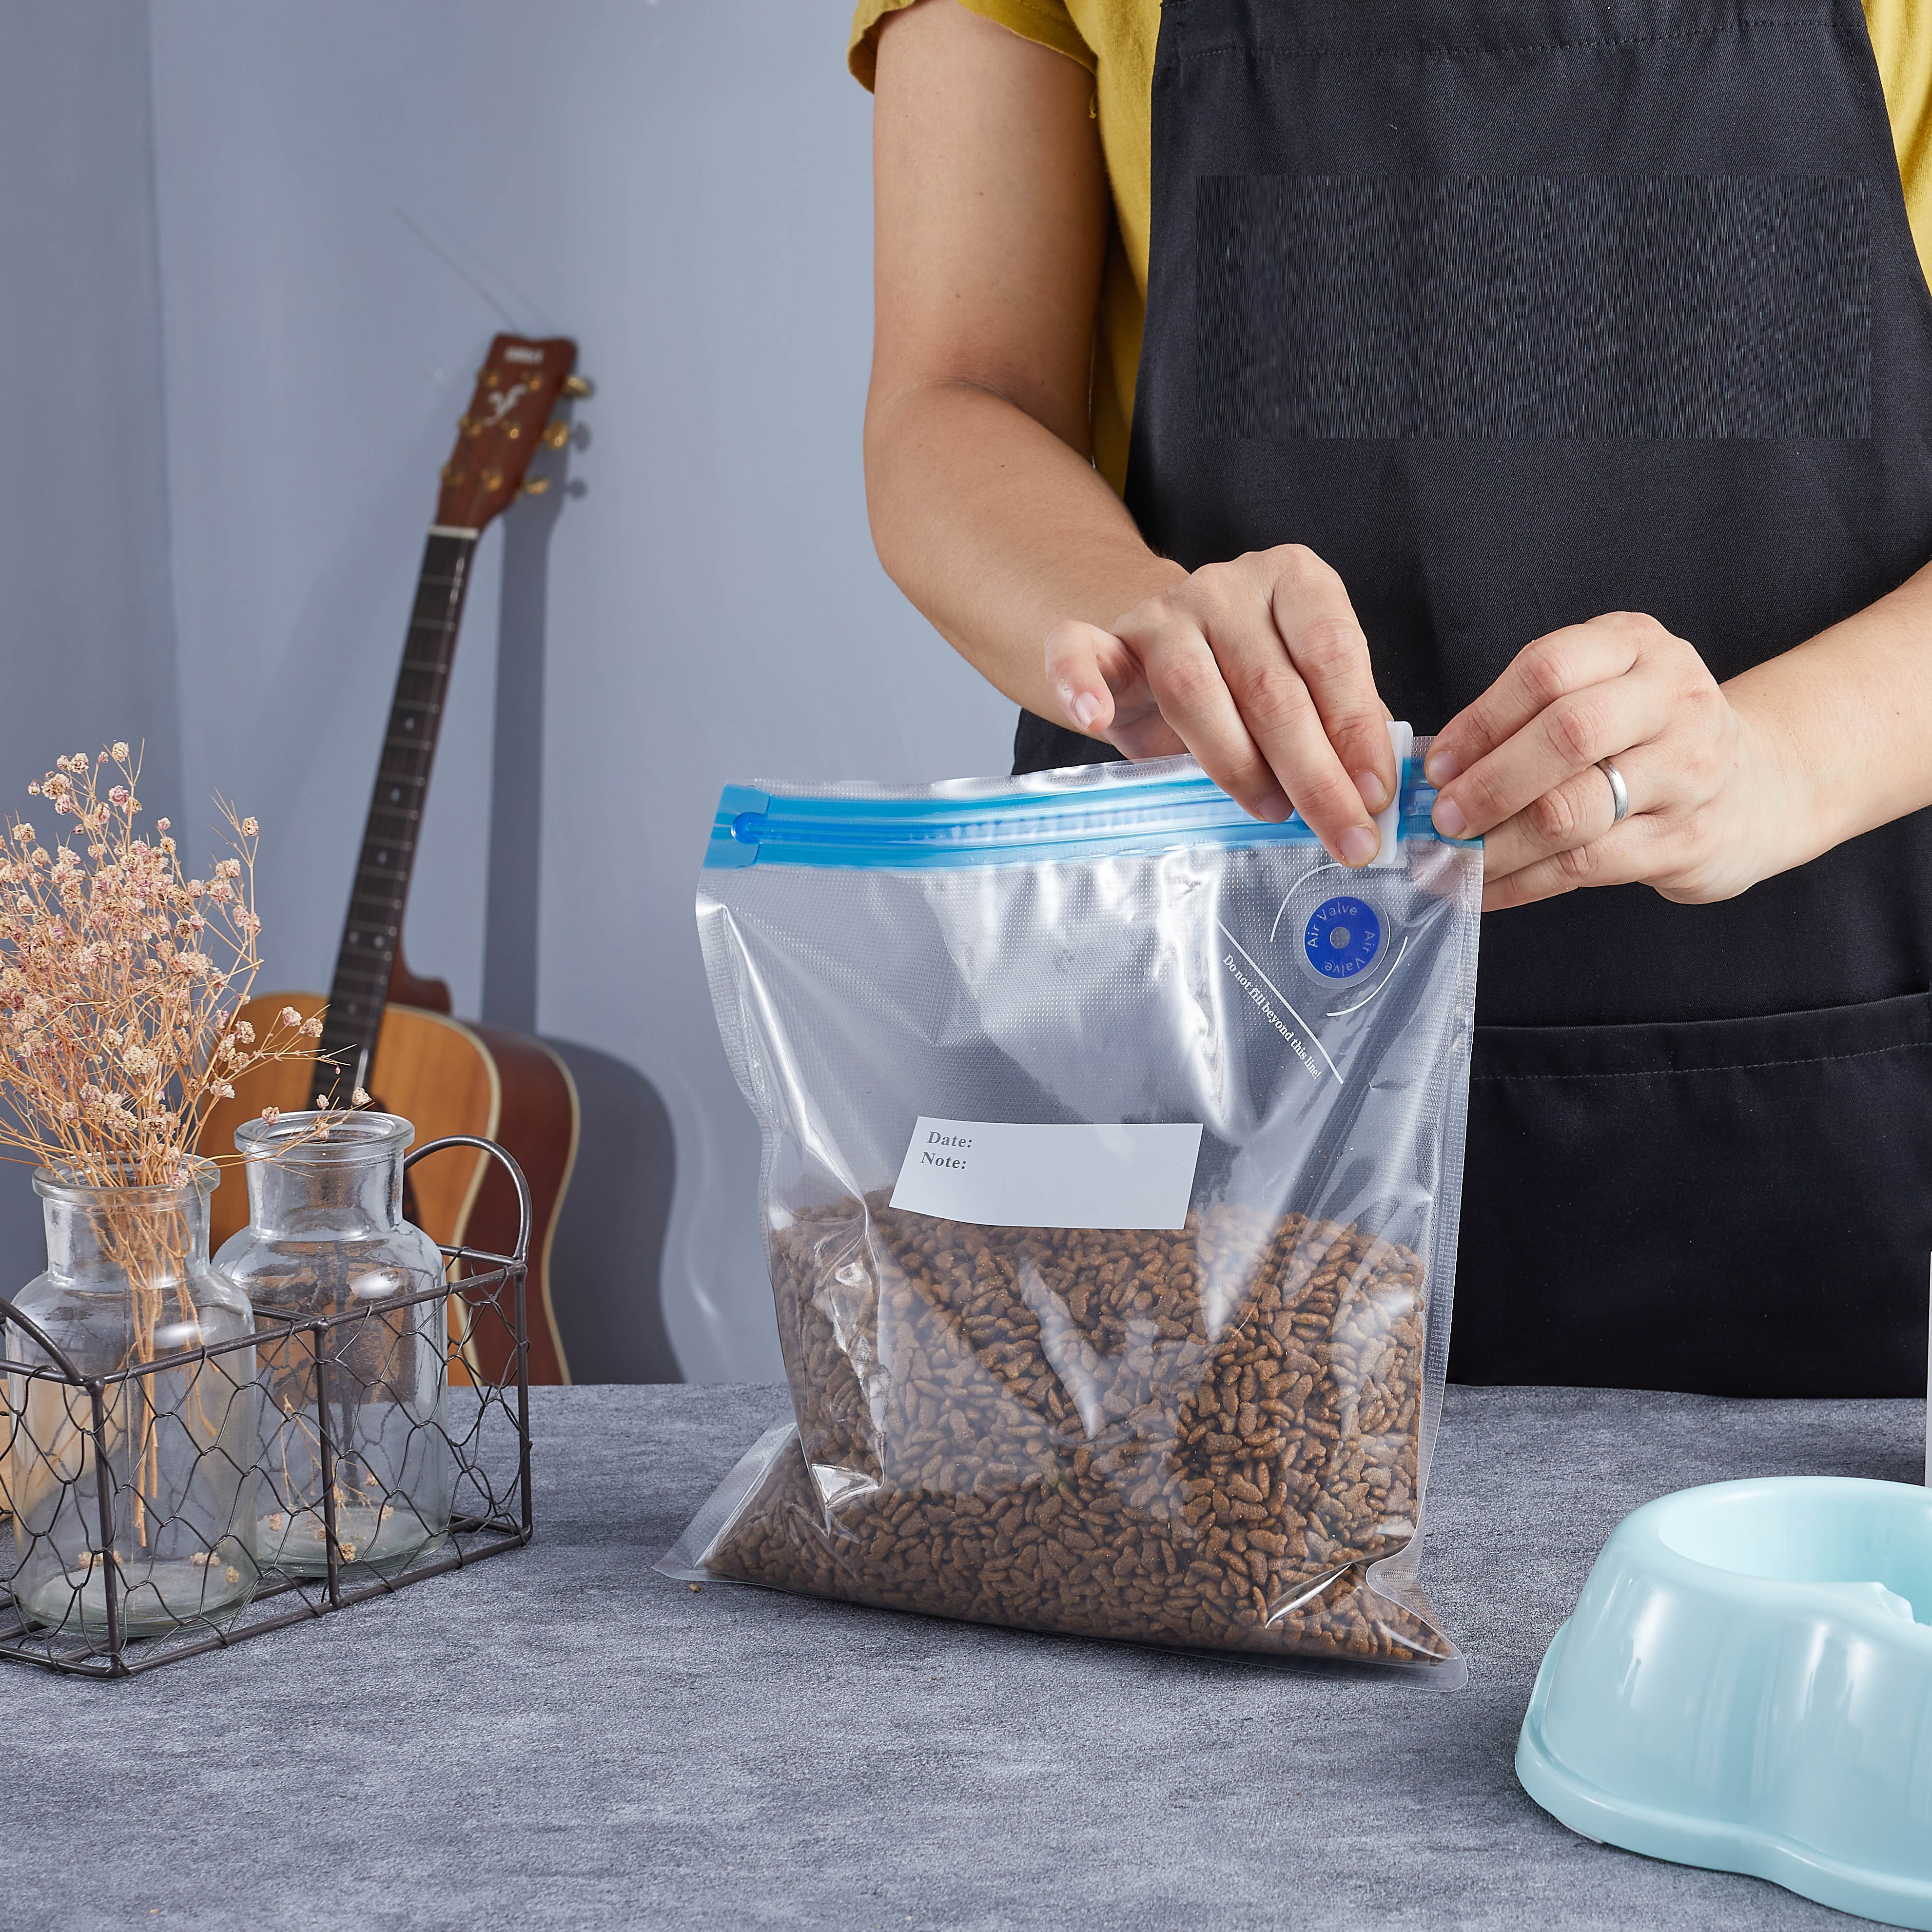 Reusable Vacuum Bag Sealed Food Bags Refrigerator Storage Dispenser Bag  Kitchen Ziplock Plastic Bags Kitchen Air Vacuum Bags